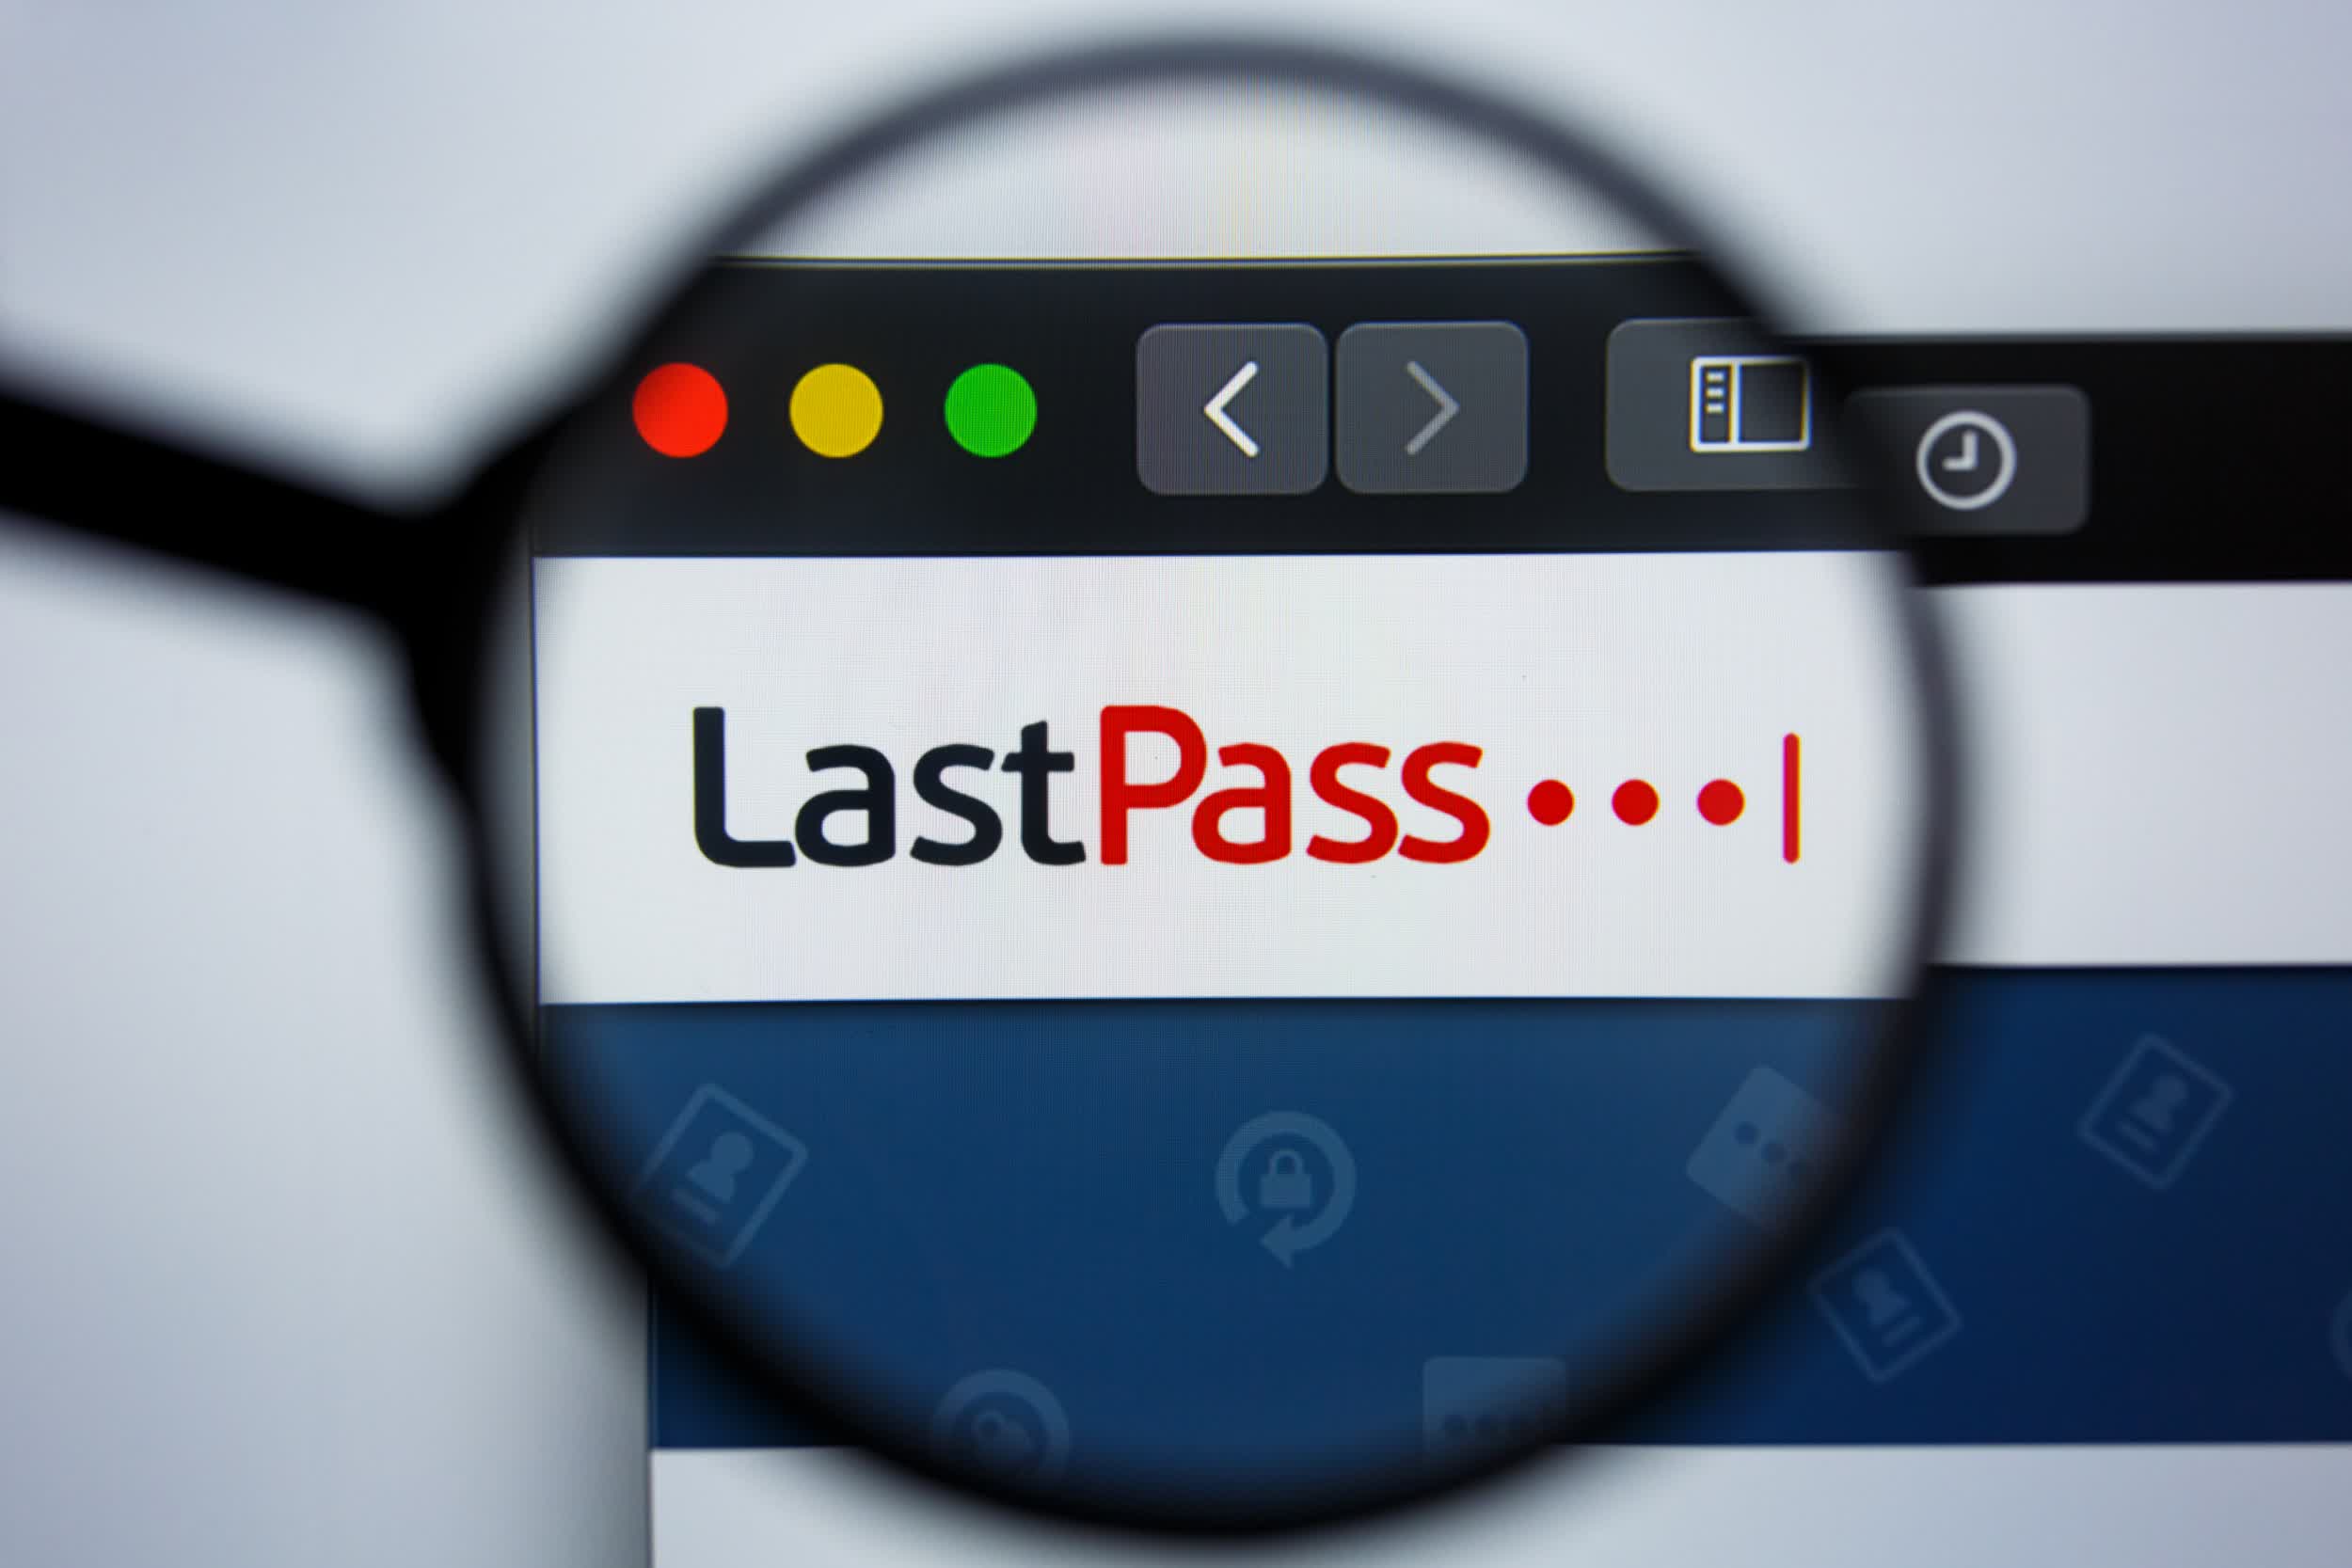 LastPass user information exposed in data breach